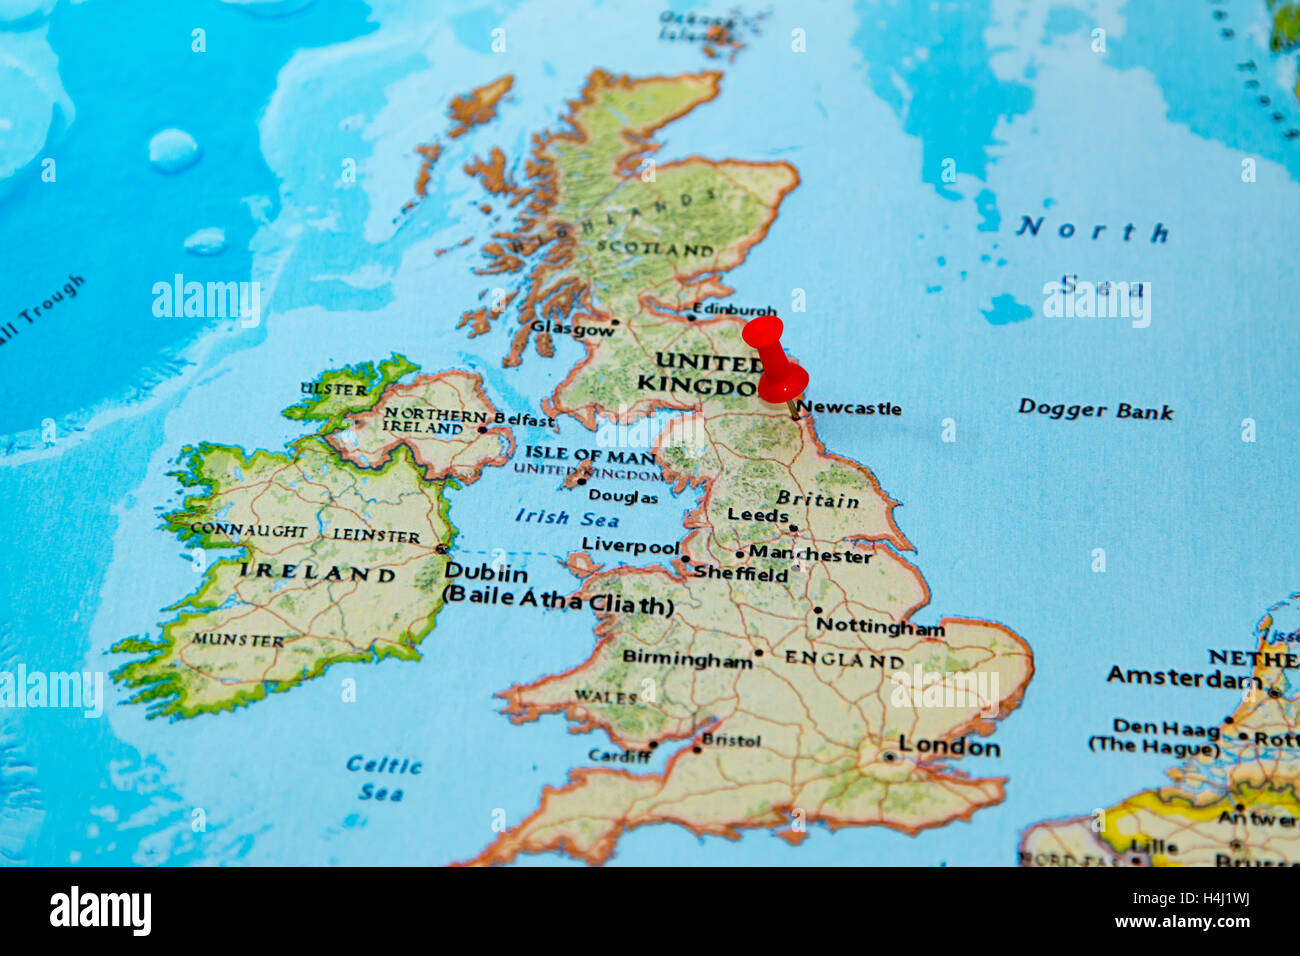 Newcastle, U.K. pinned on a map of Europe. Stock Photo